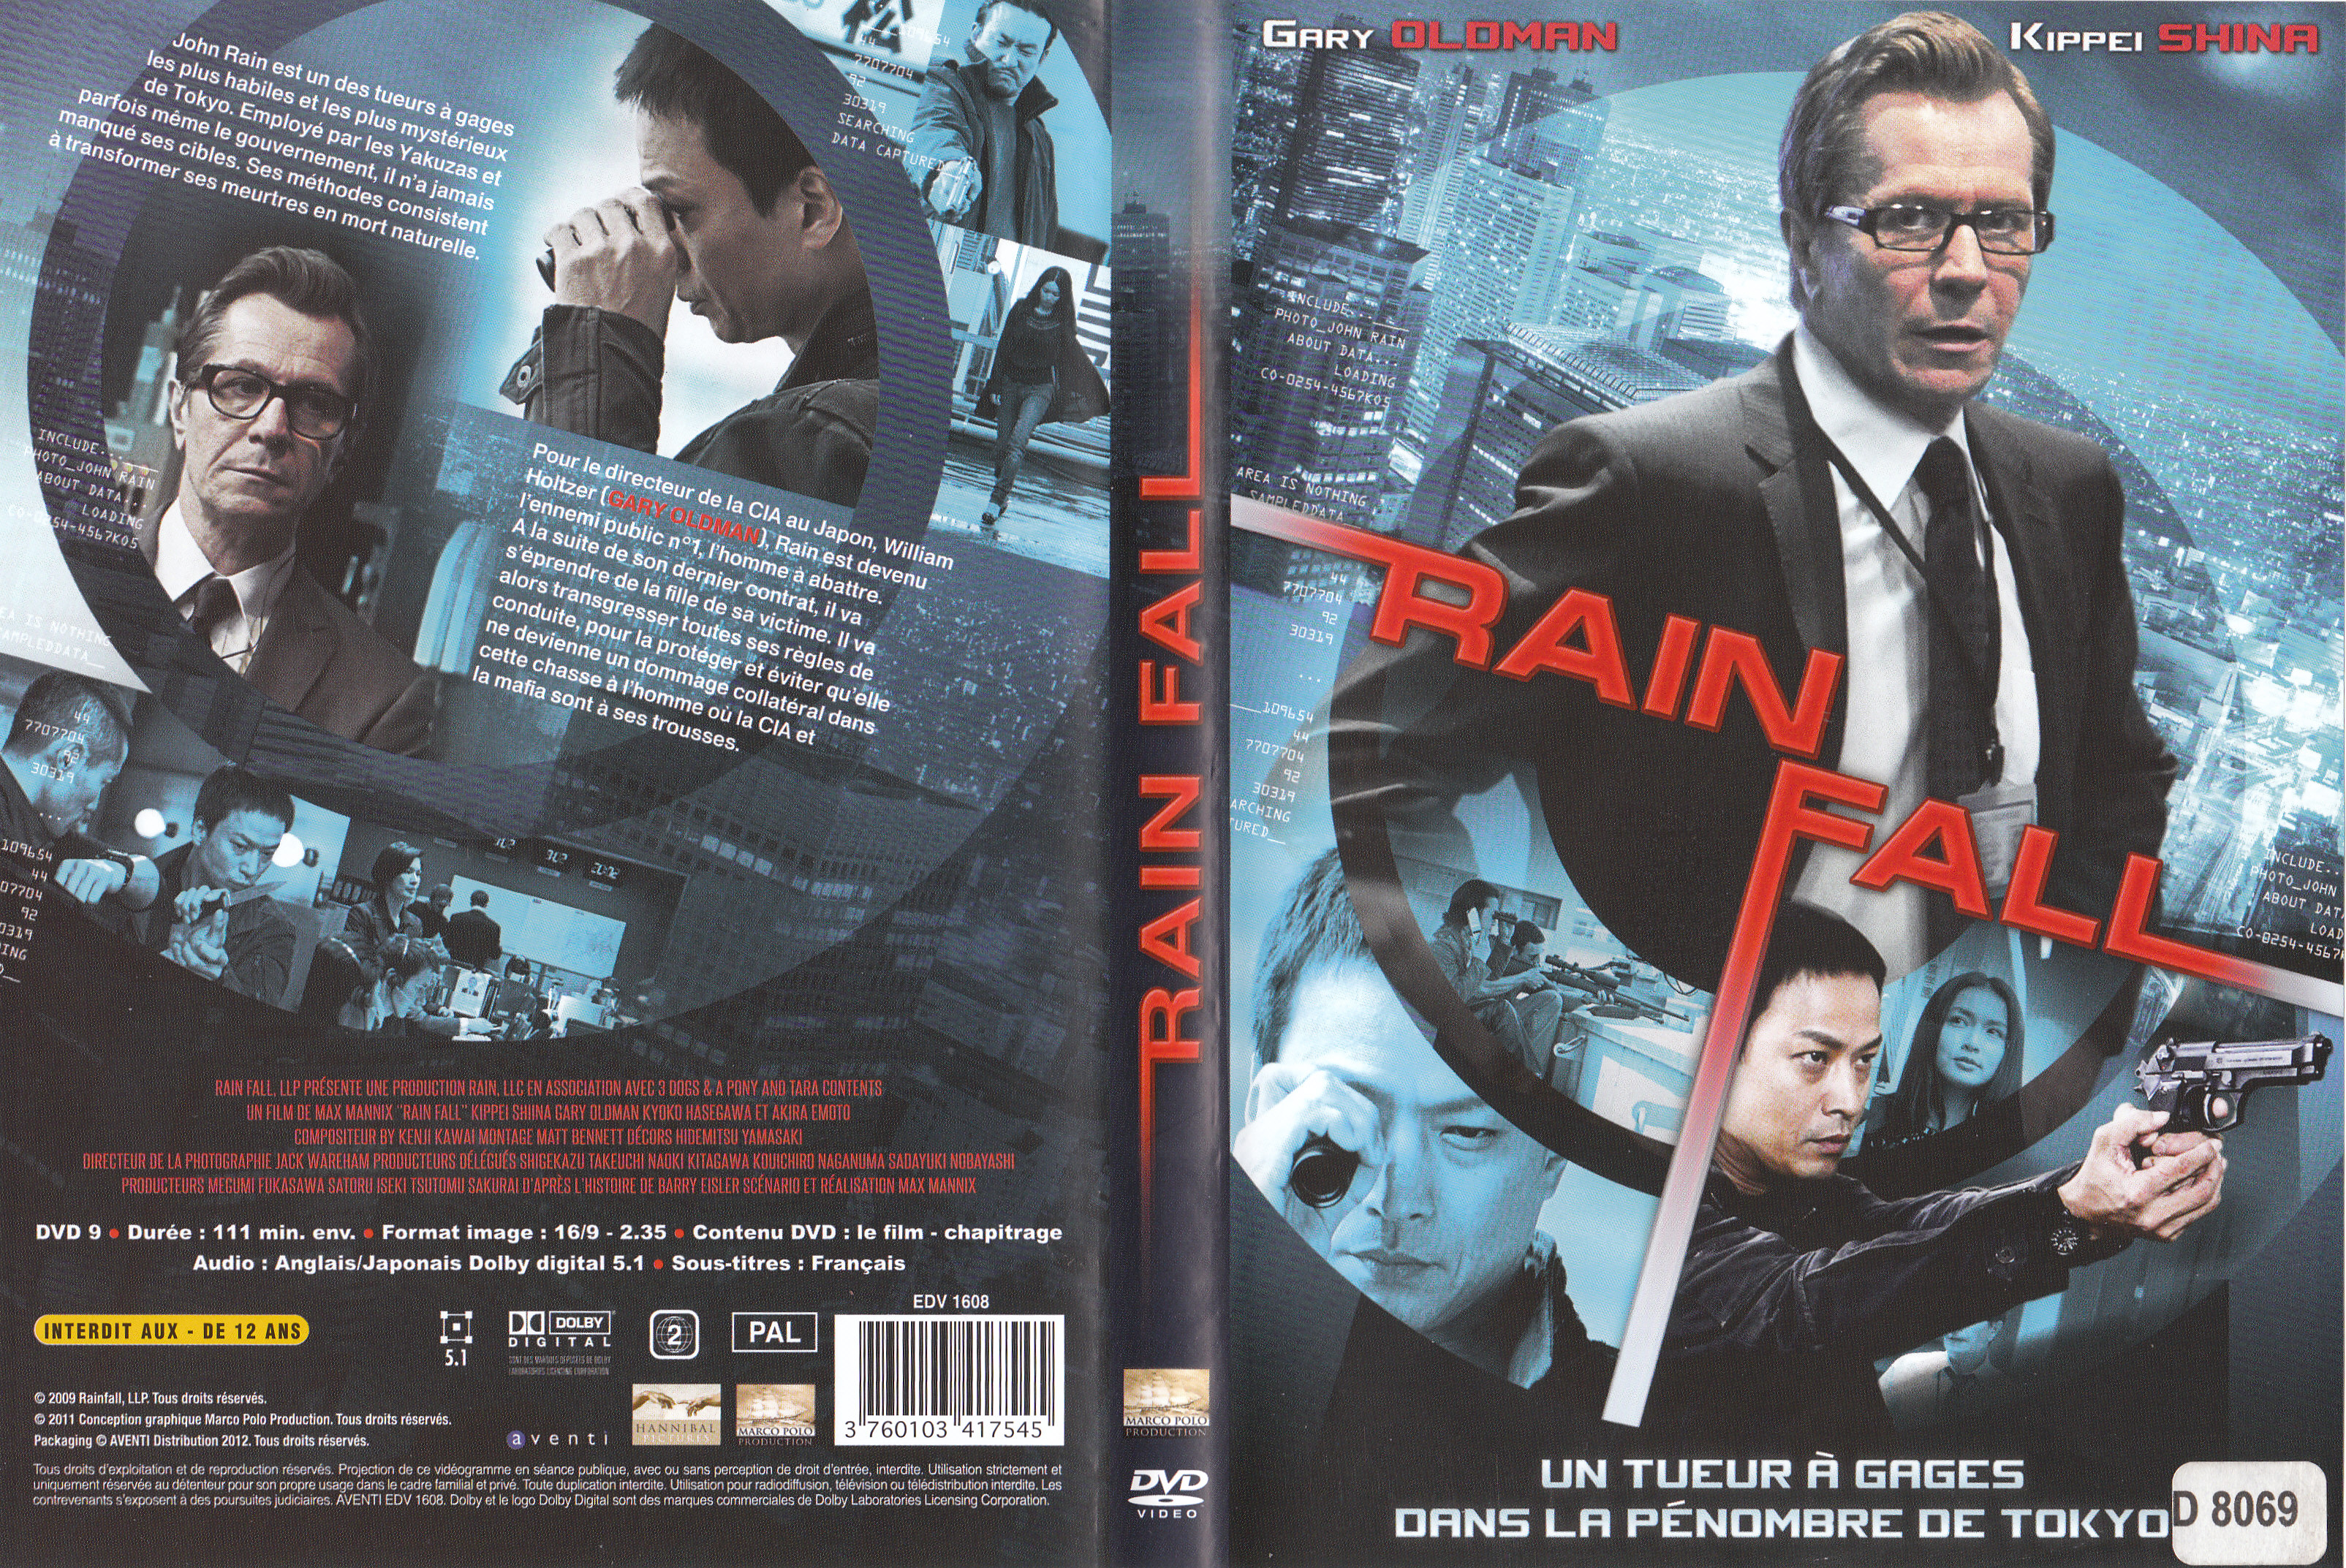 Jaquette DVD Rain fall